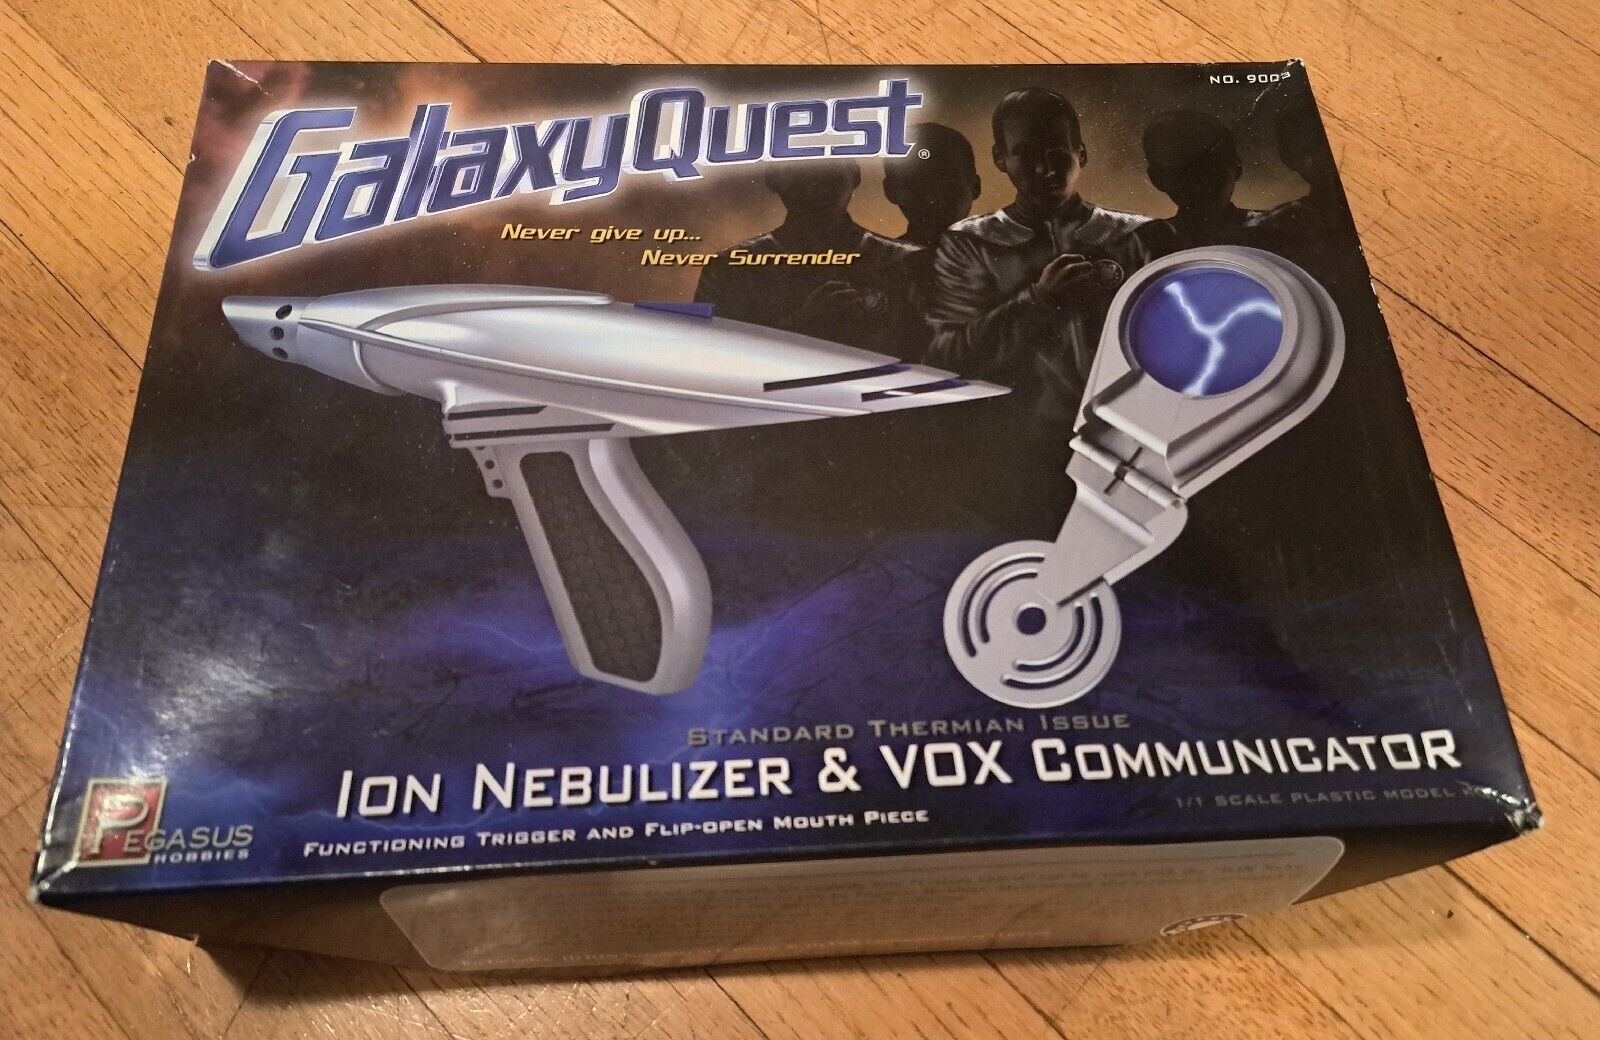 Galaxy Quest - No 9003 ION Nebulizer & VOX Communicator Set Pegasus (new in box)